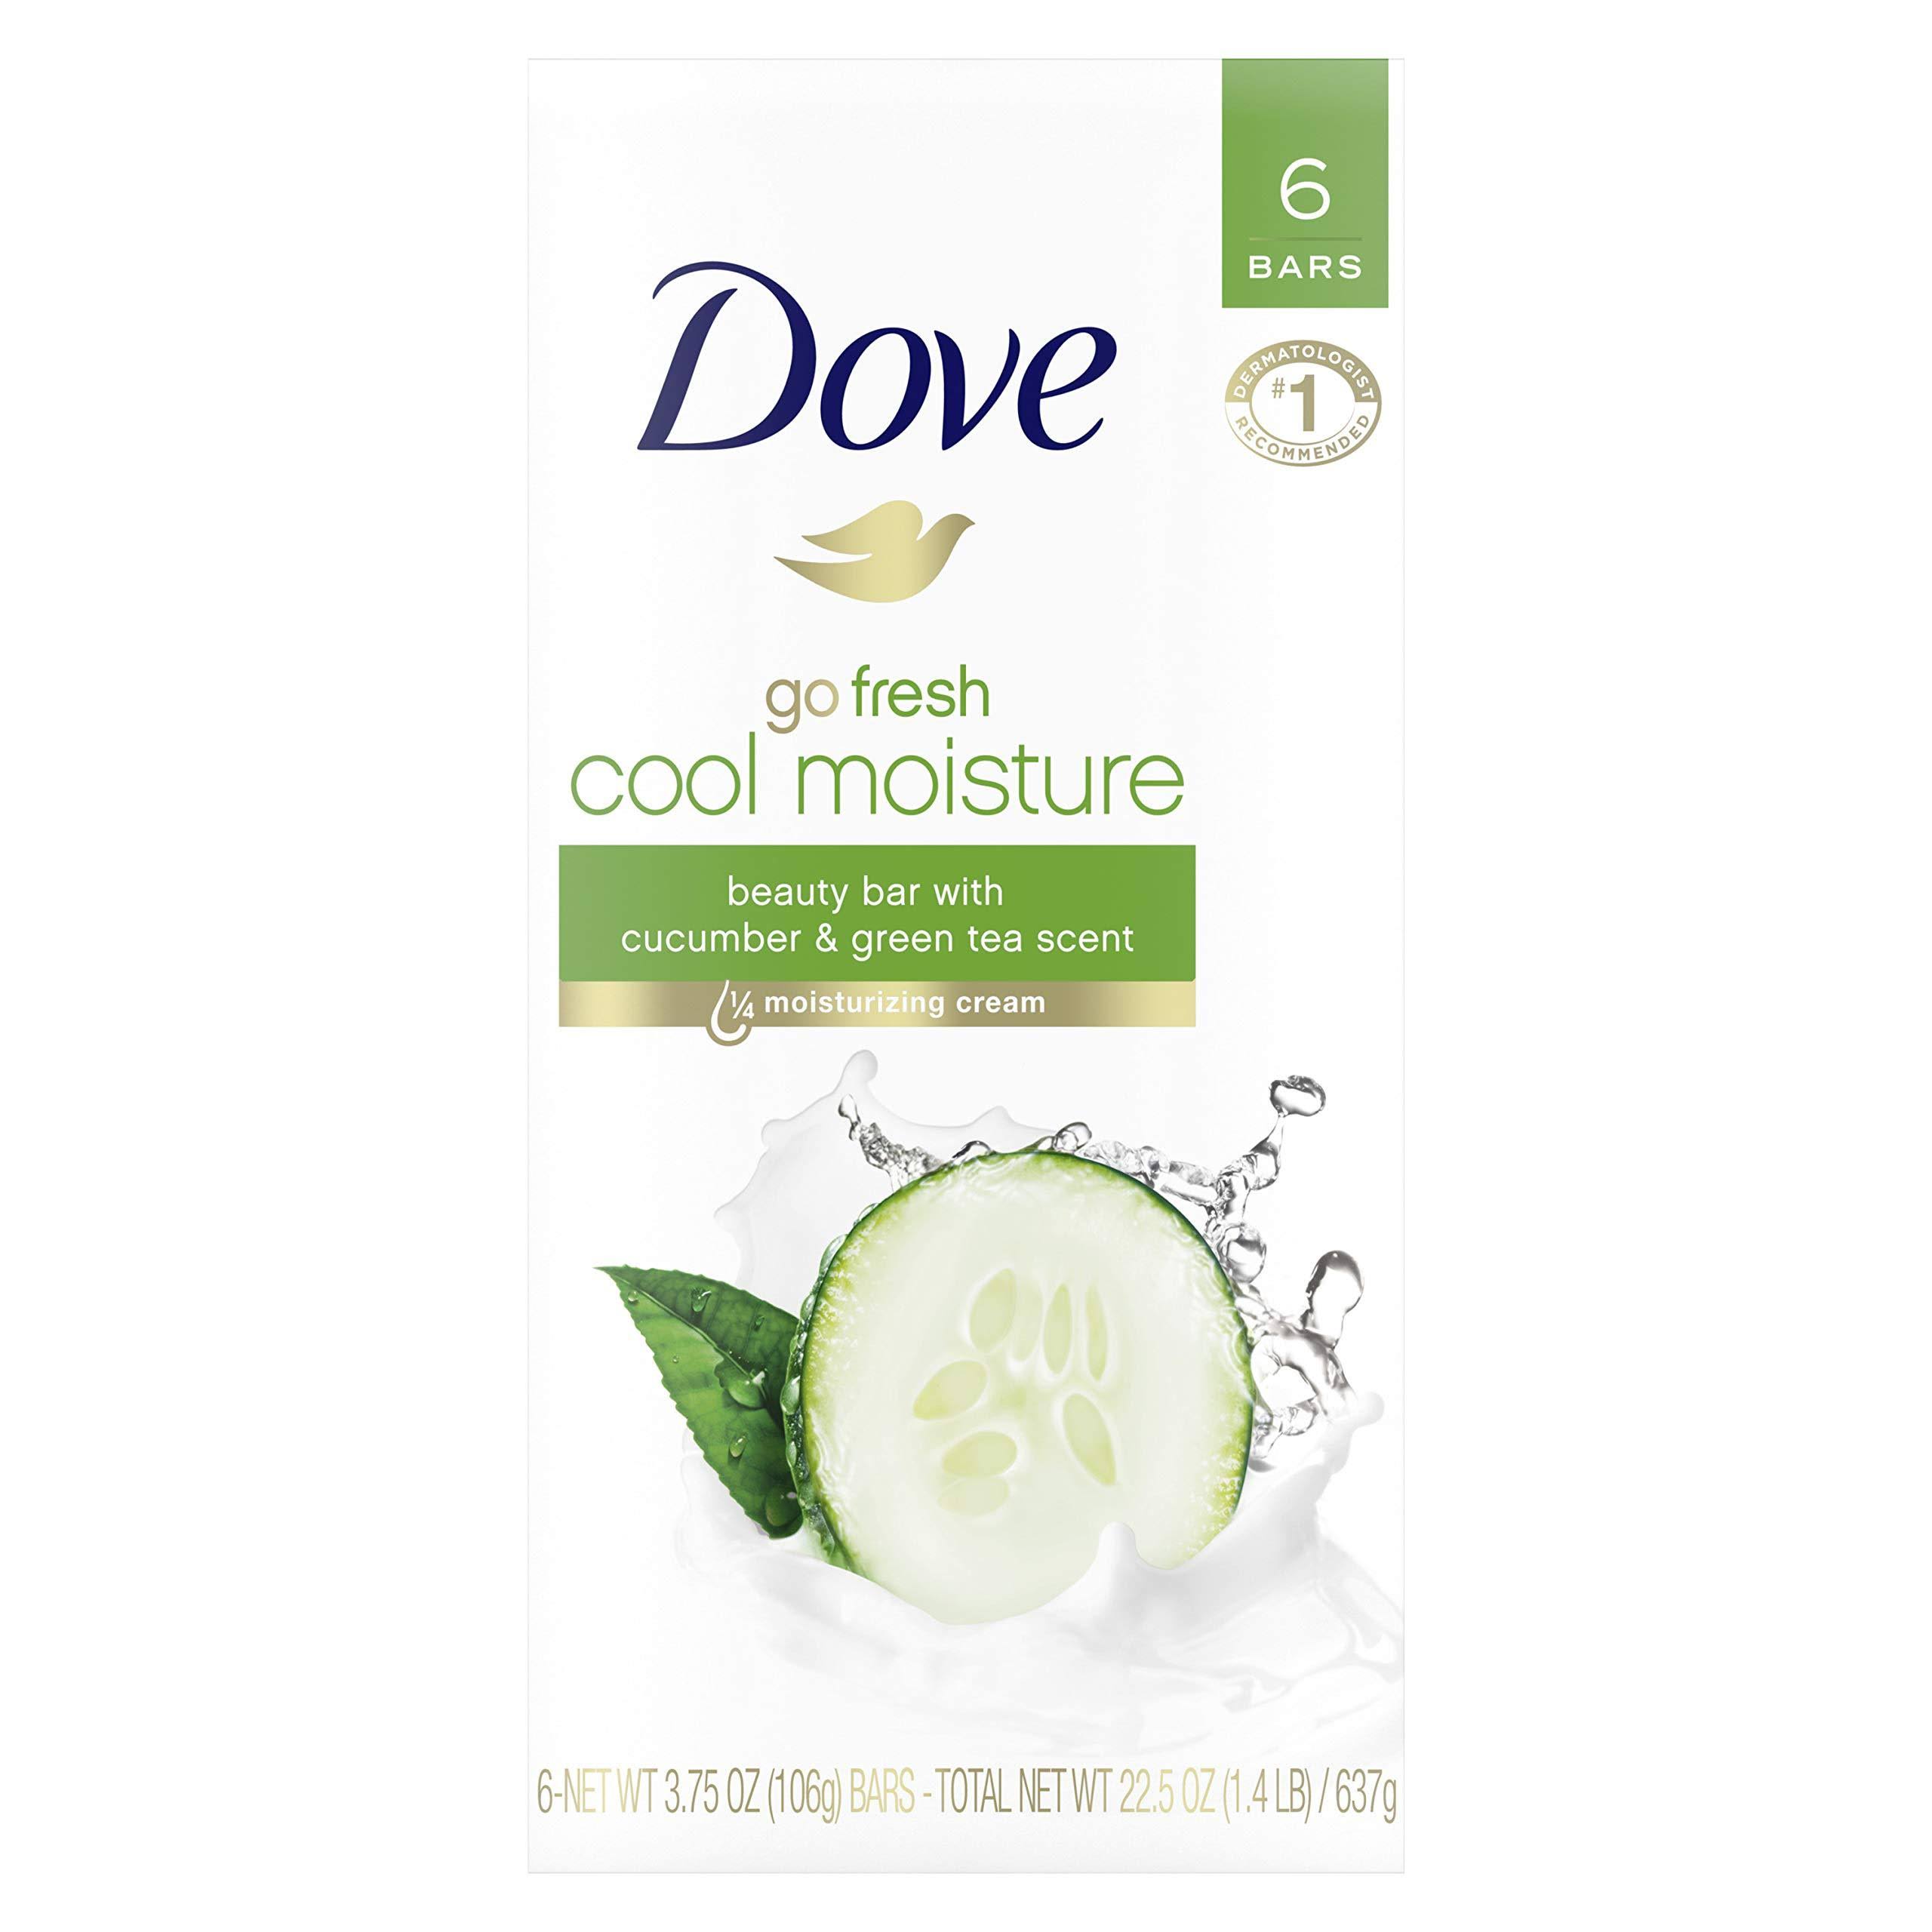 Dove Go Fresh Cool Moisture Beauty Bar with Cucumber & Green Tea Scent Bath Bars - 6 x 4 oz